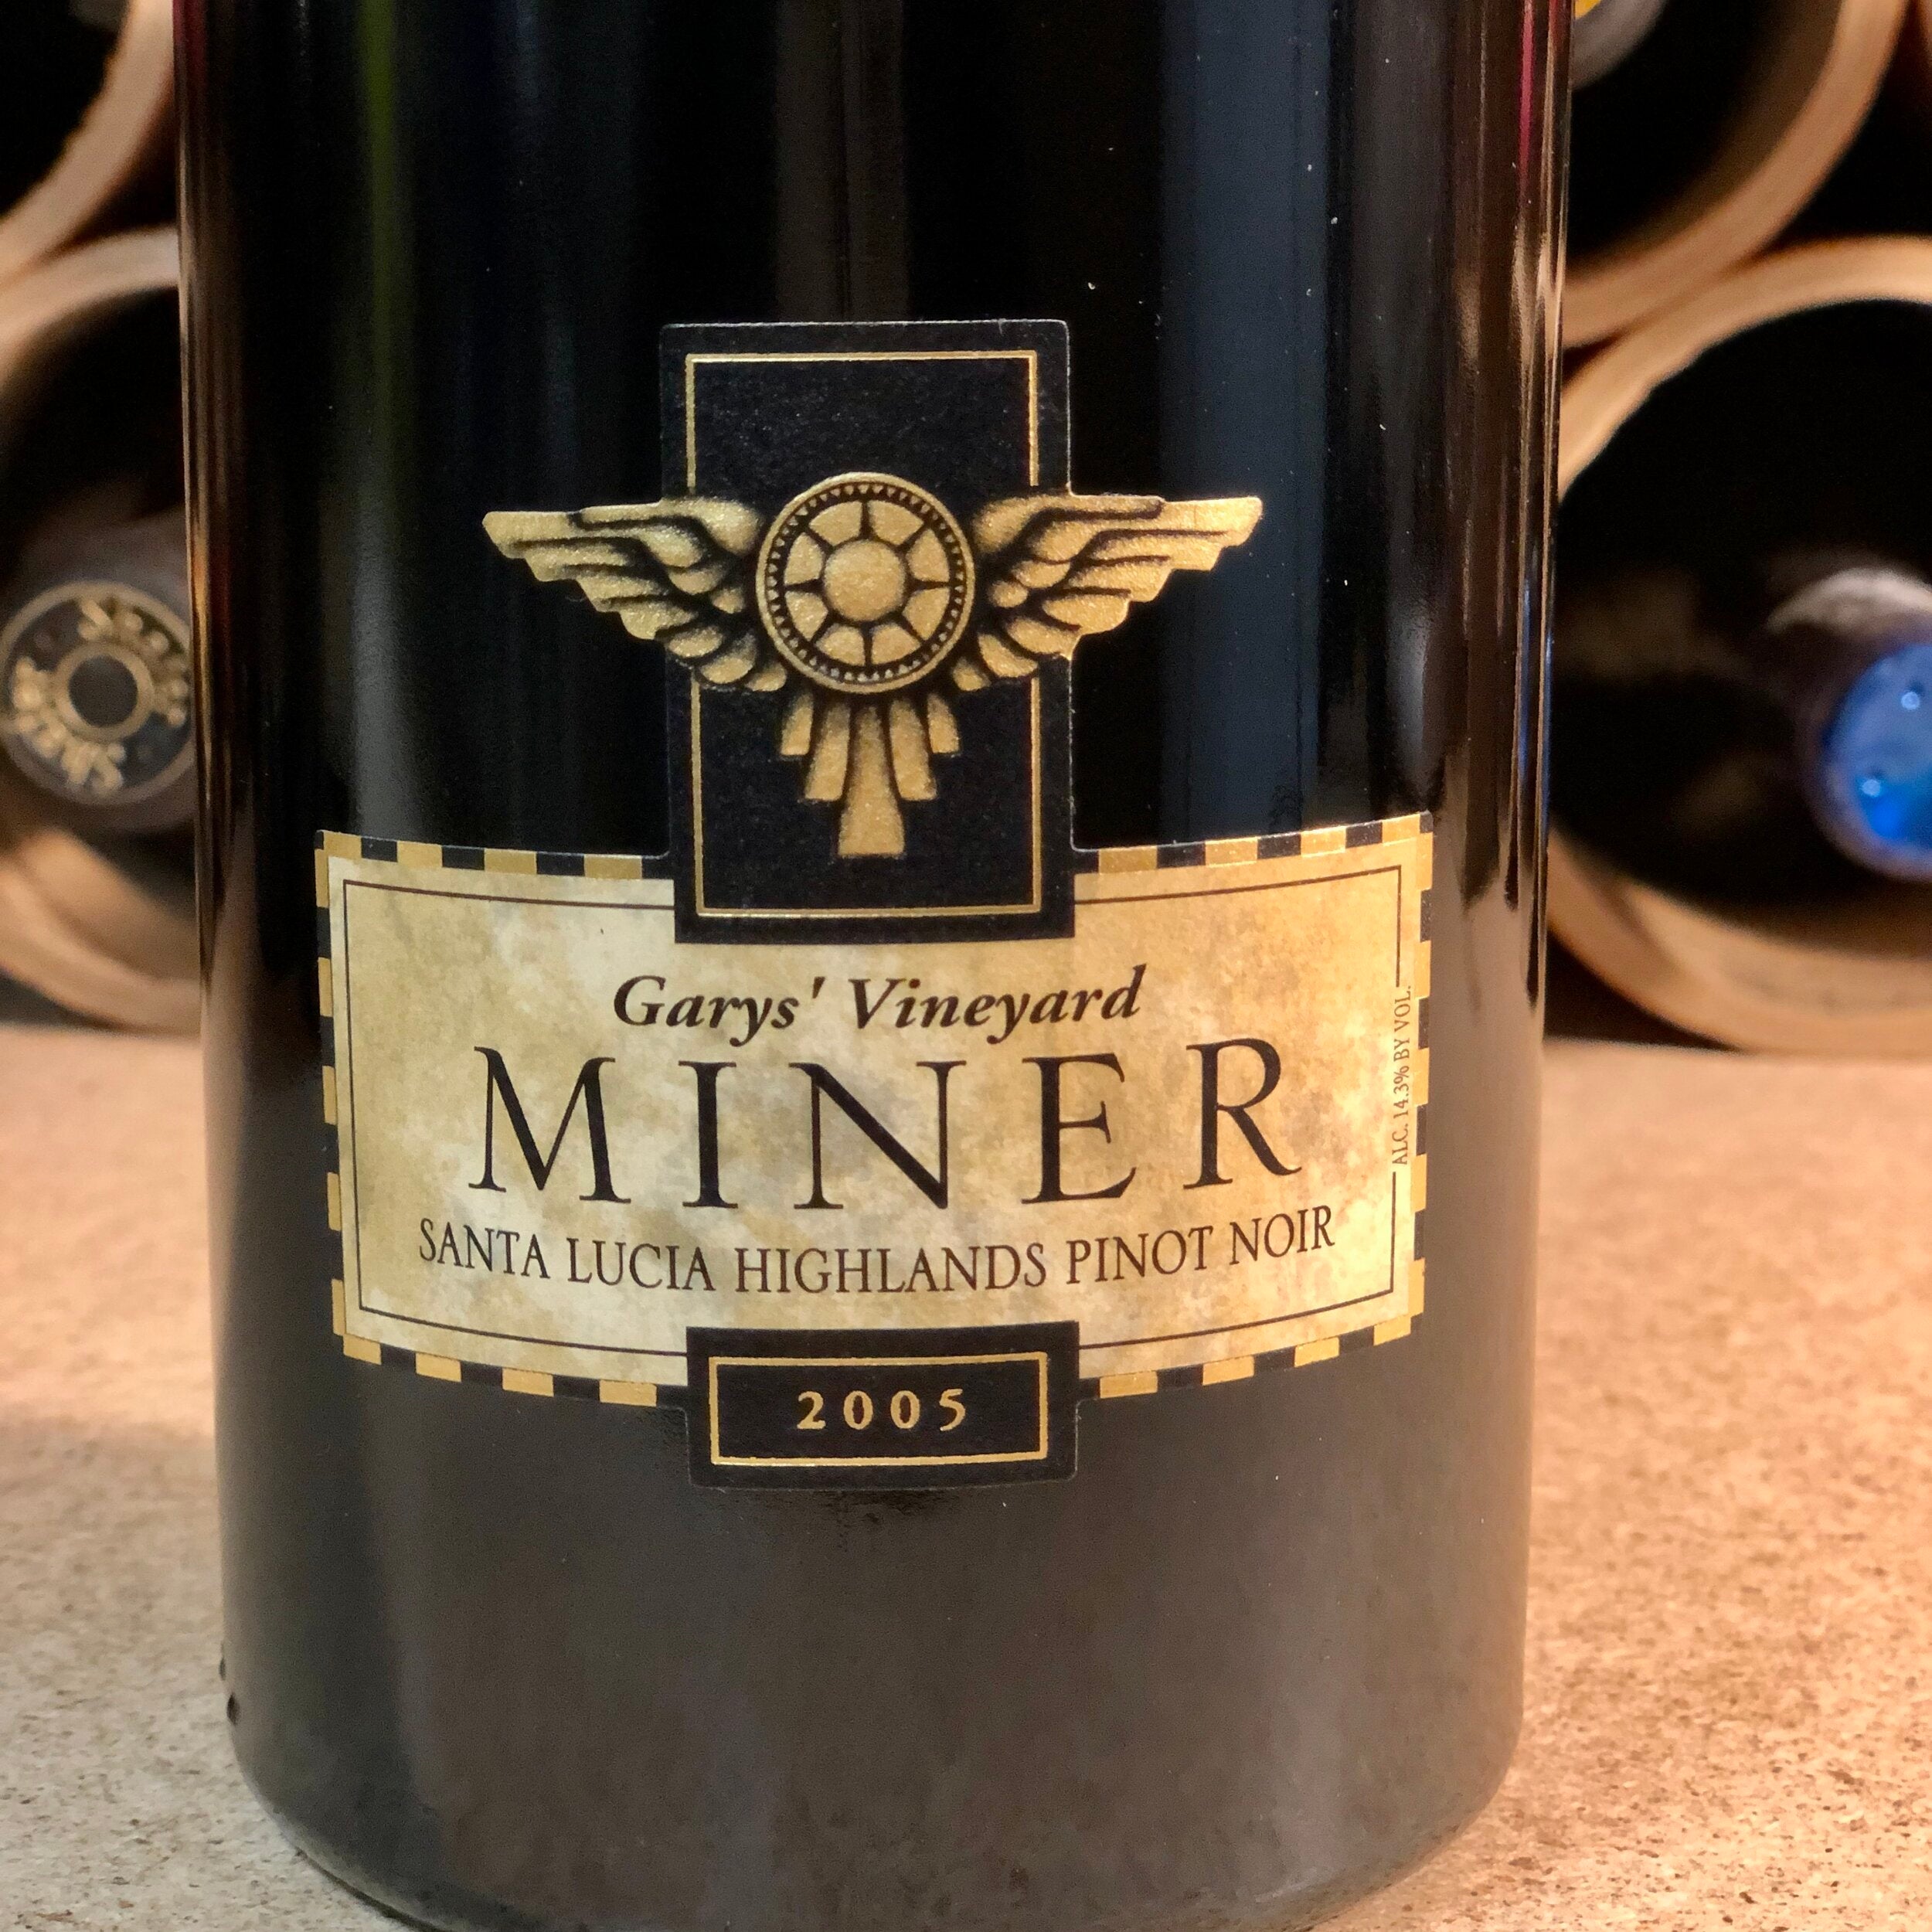 Miner, Santa Lucia Highlands, Gary's Vineyard, Pinot Noir 2005